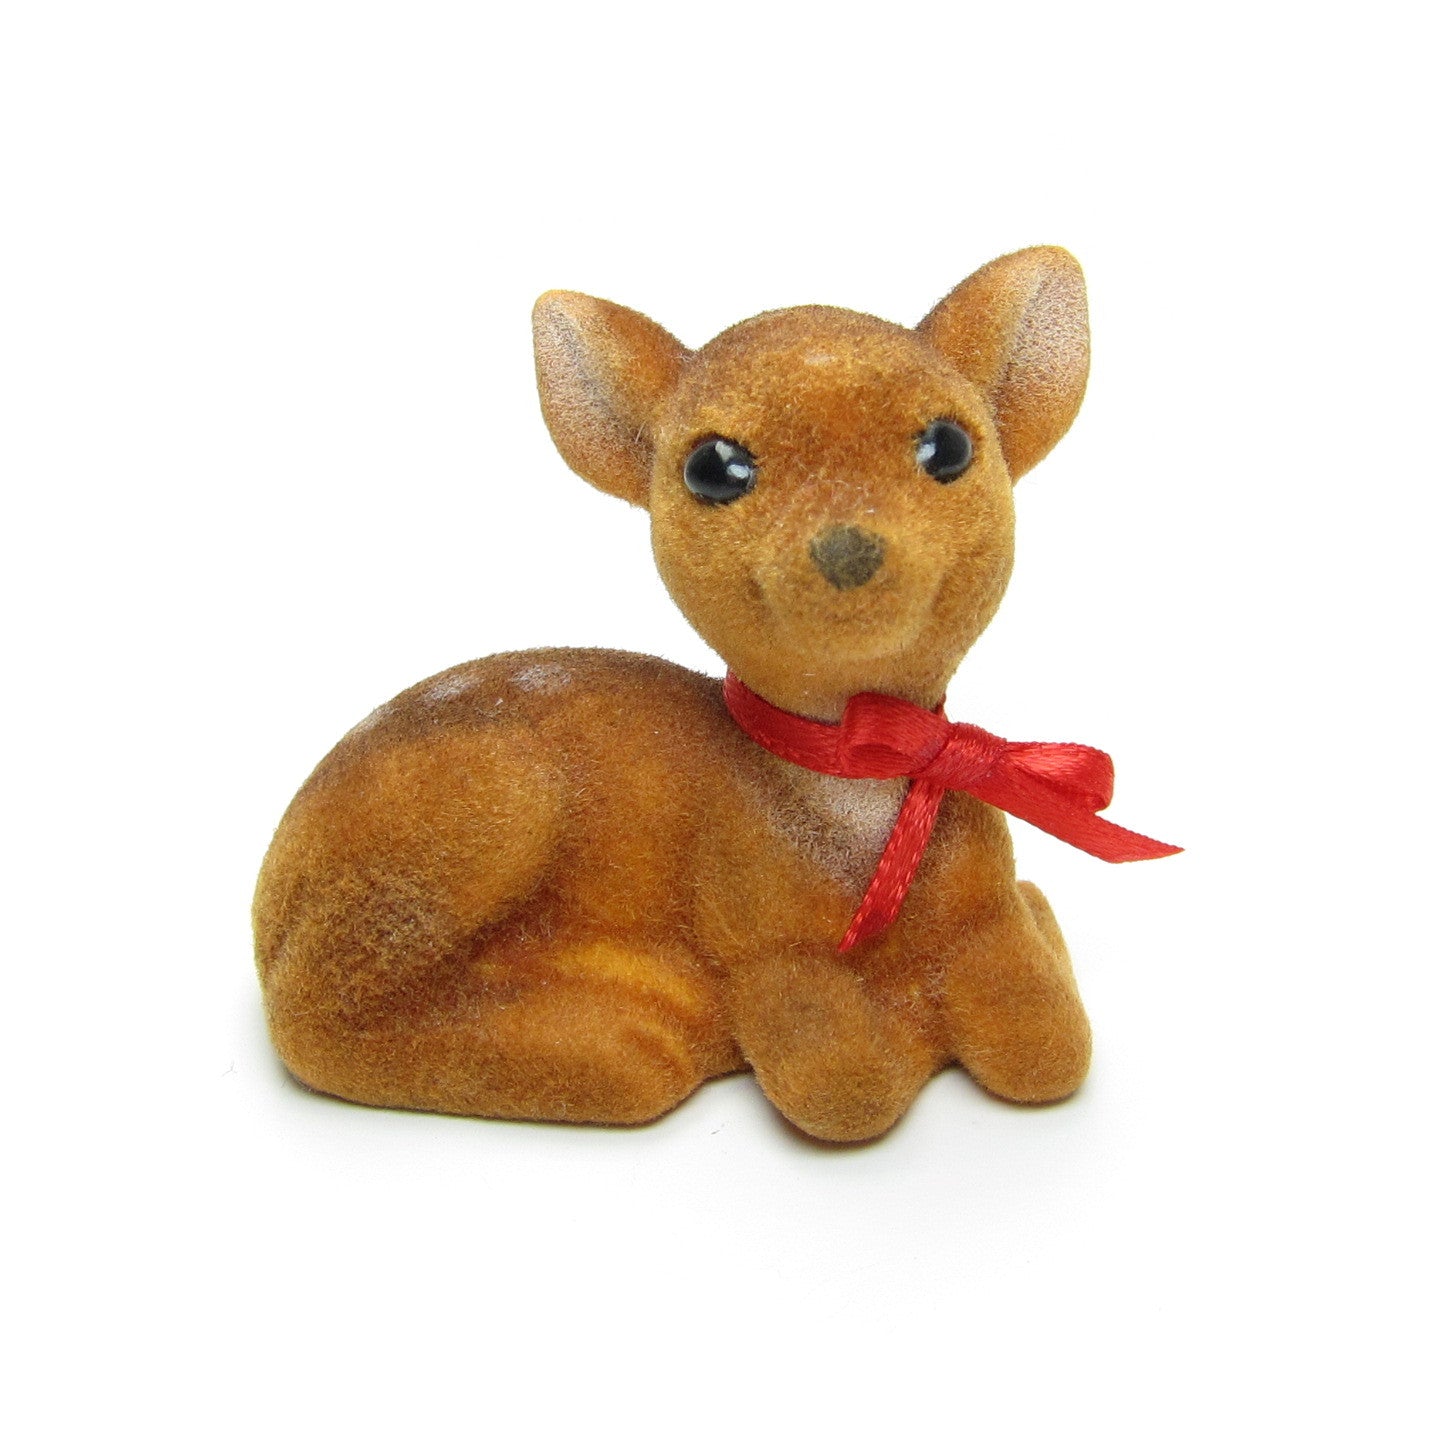 Hallmark Merry Miniatures flocked fawn or deer figurine